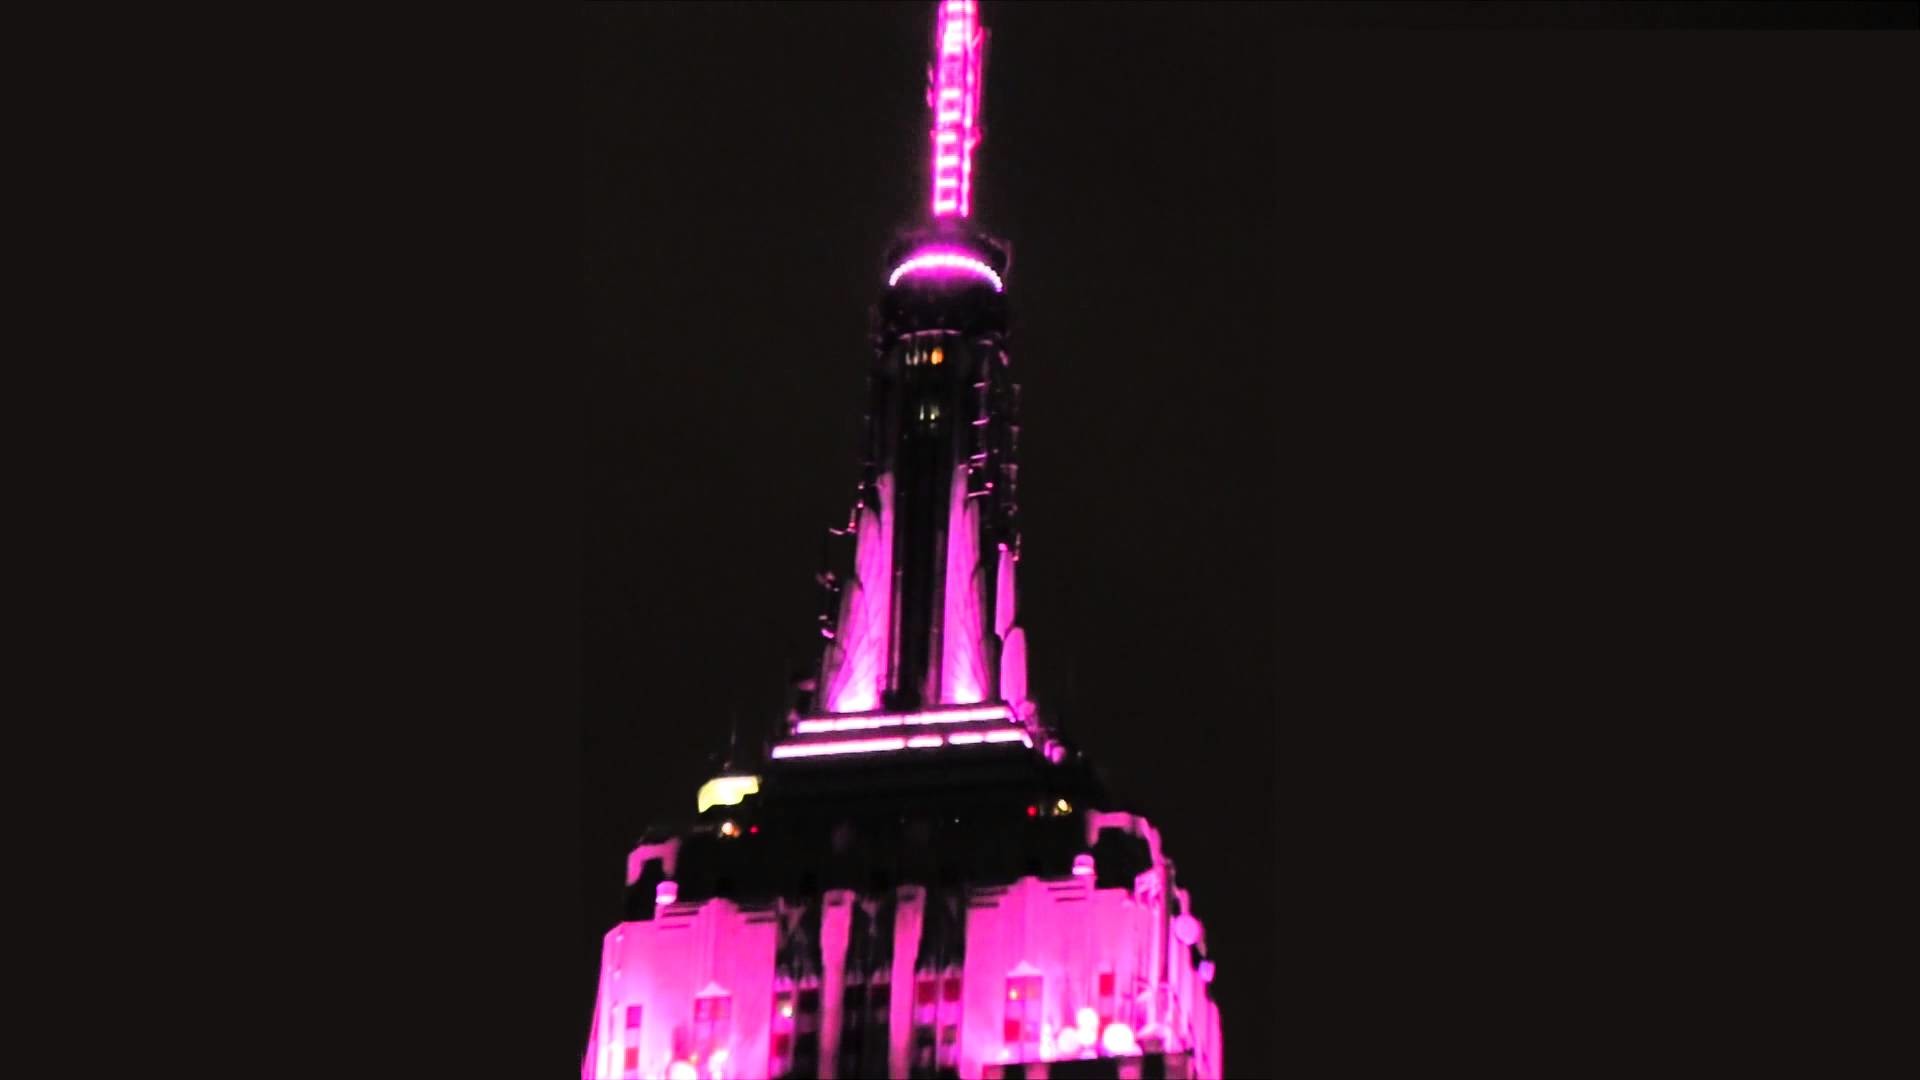 1920x1080 Empire State Building Lights for EstÃ©e Lauder's Breast Cancer Awareness  Campaign